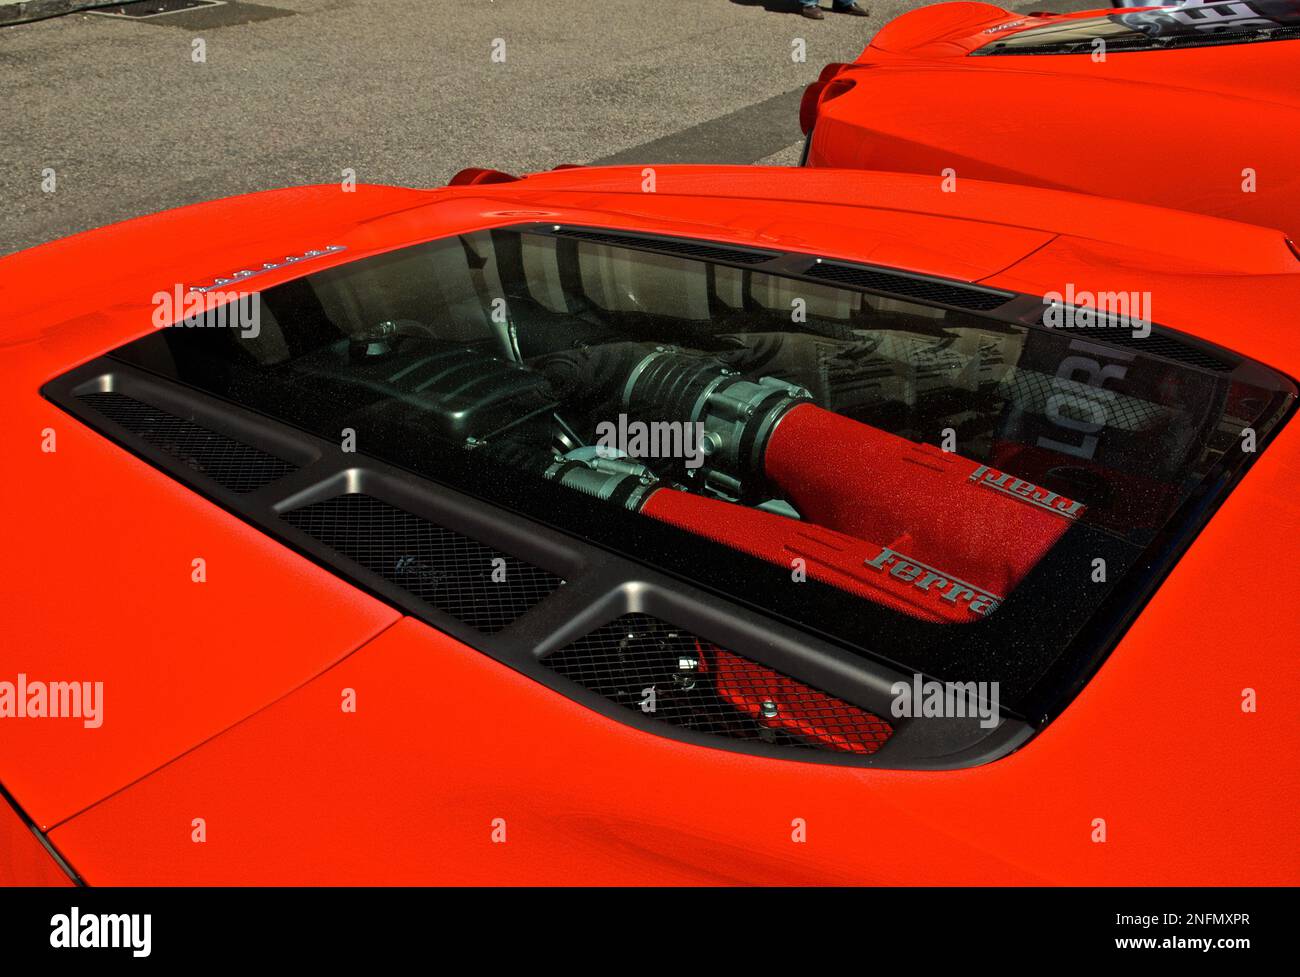 Red Ferrari F430 Transparent Engine Hood Stock Photo